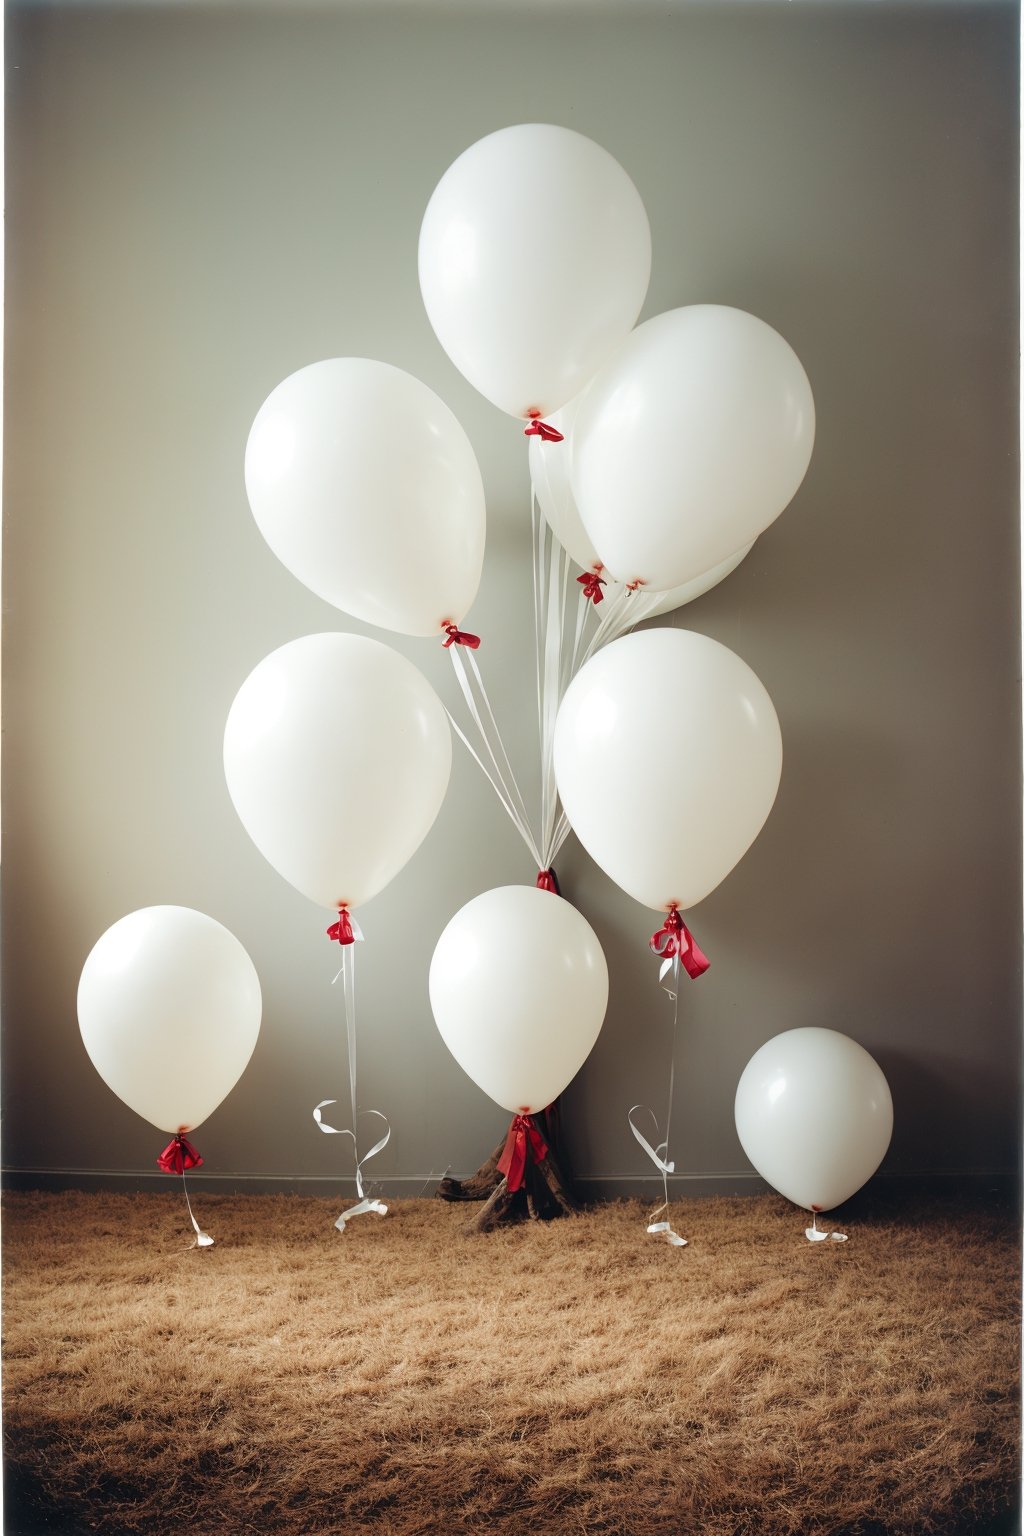 photo white balloons, taken on a hasselblad medium format camera
